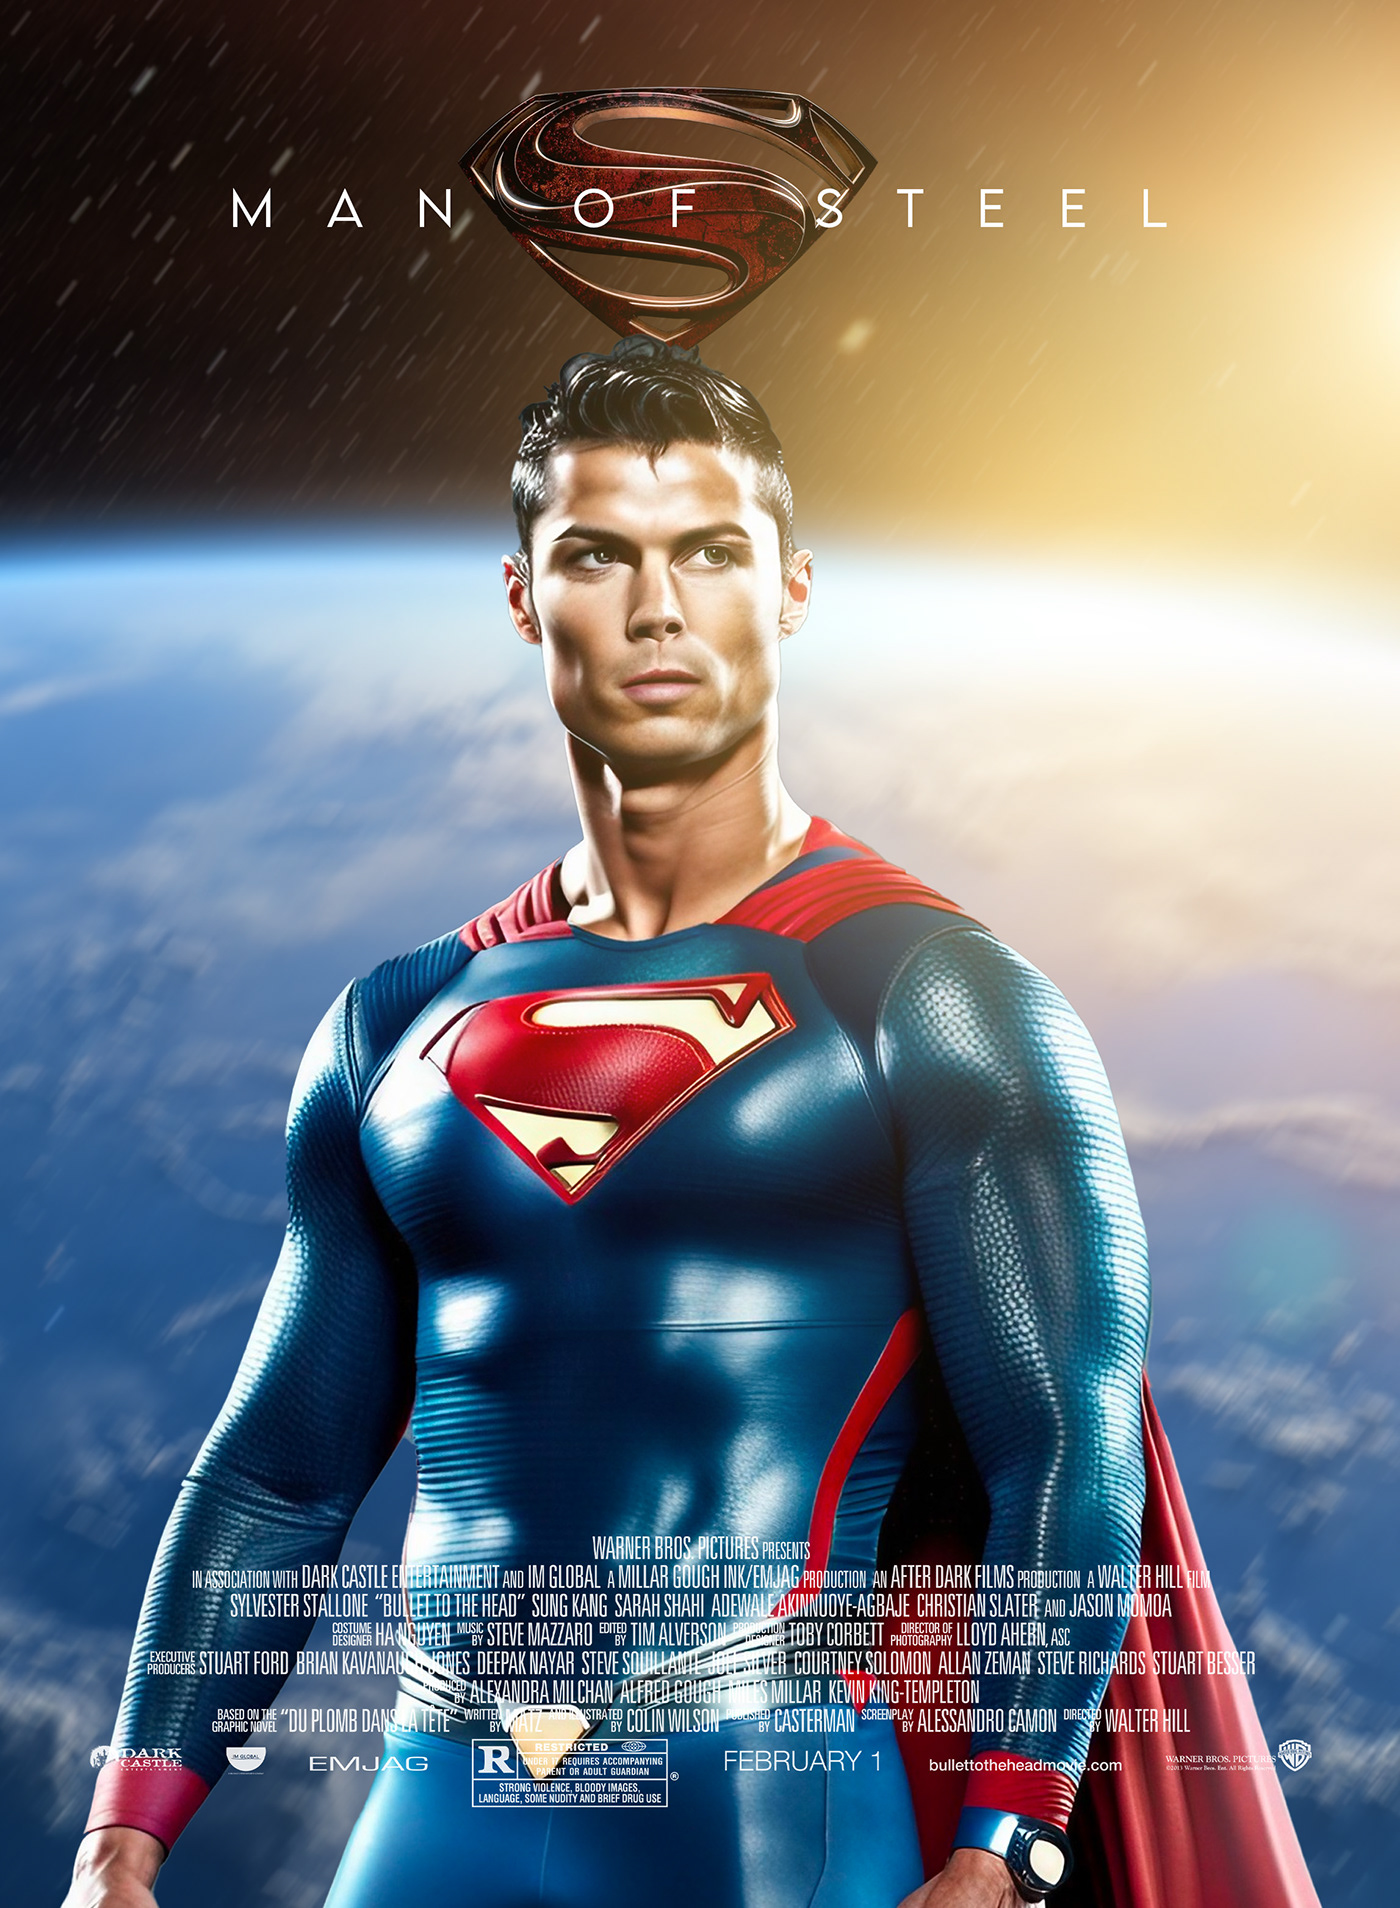 movieposter posterdesign flyer messi Ronaldo superman ironman 3 ai Neyamr JR